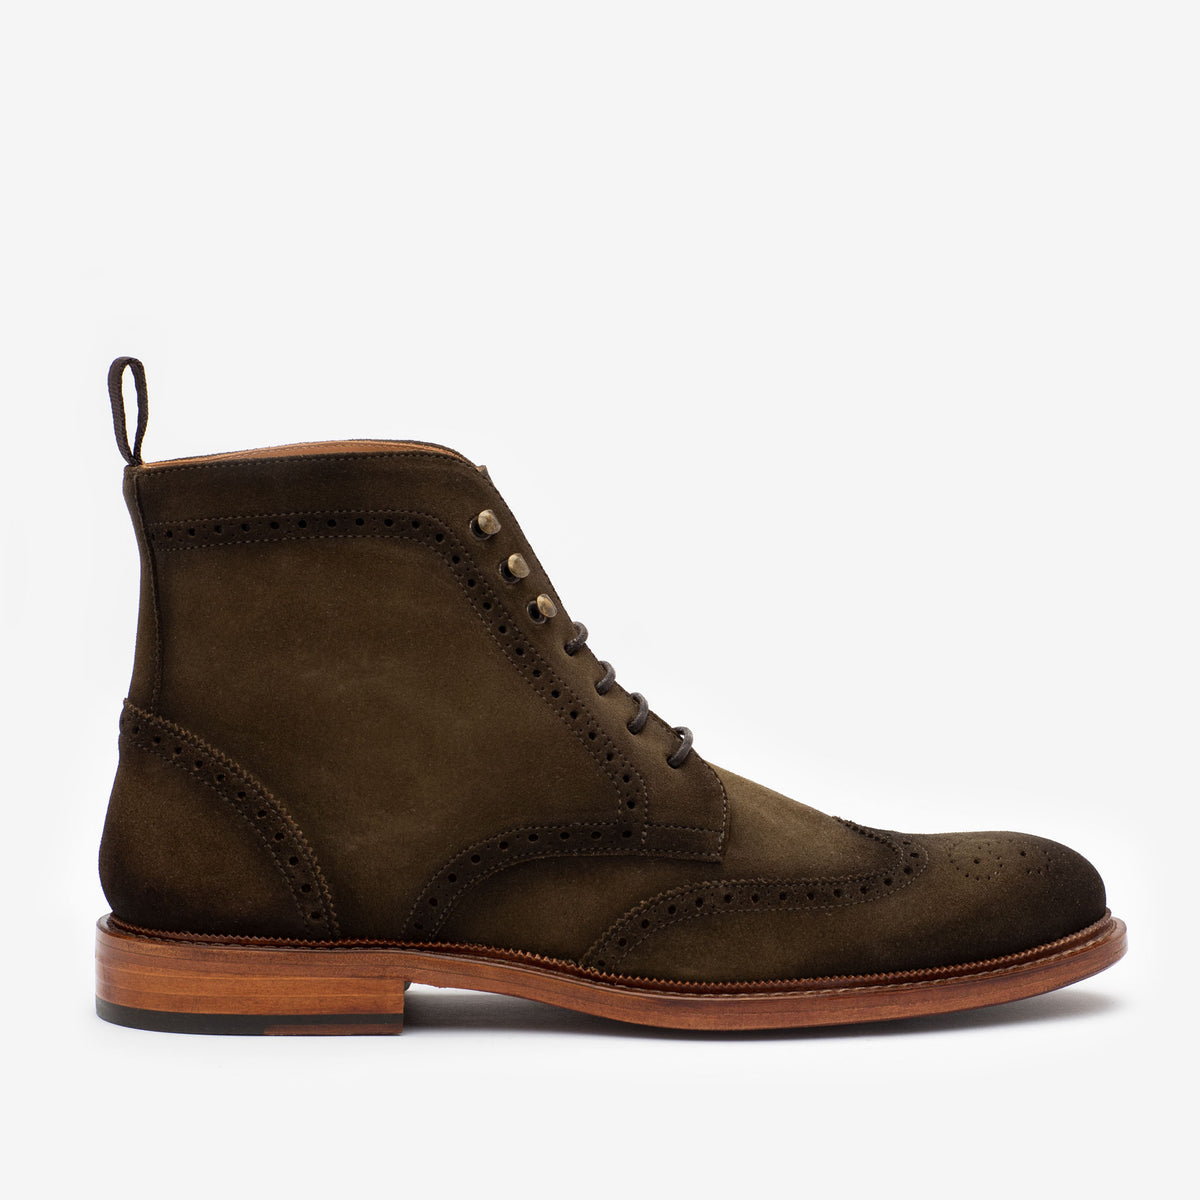 Shop our Men's Leather Boots, Dress Shoes & Sneakers | TAFT